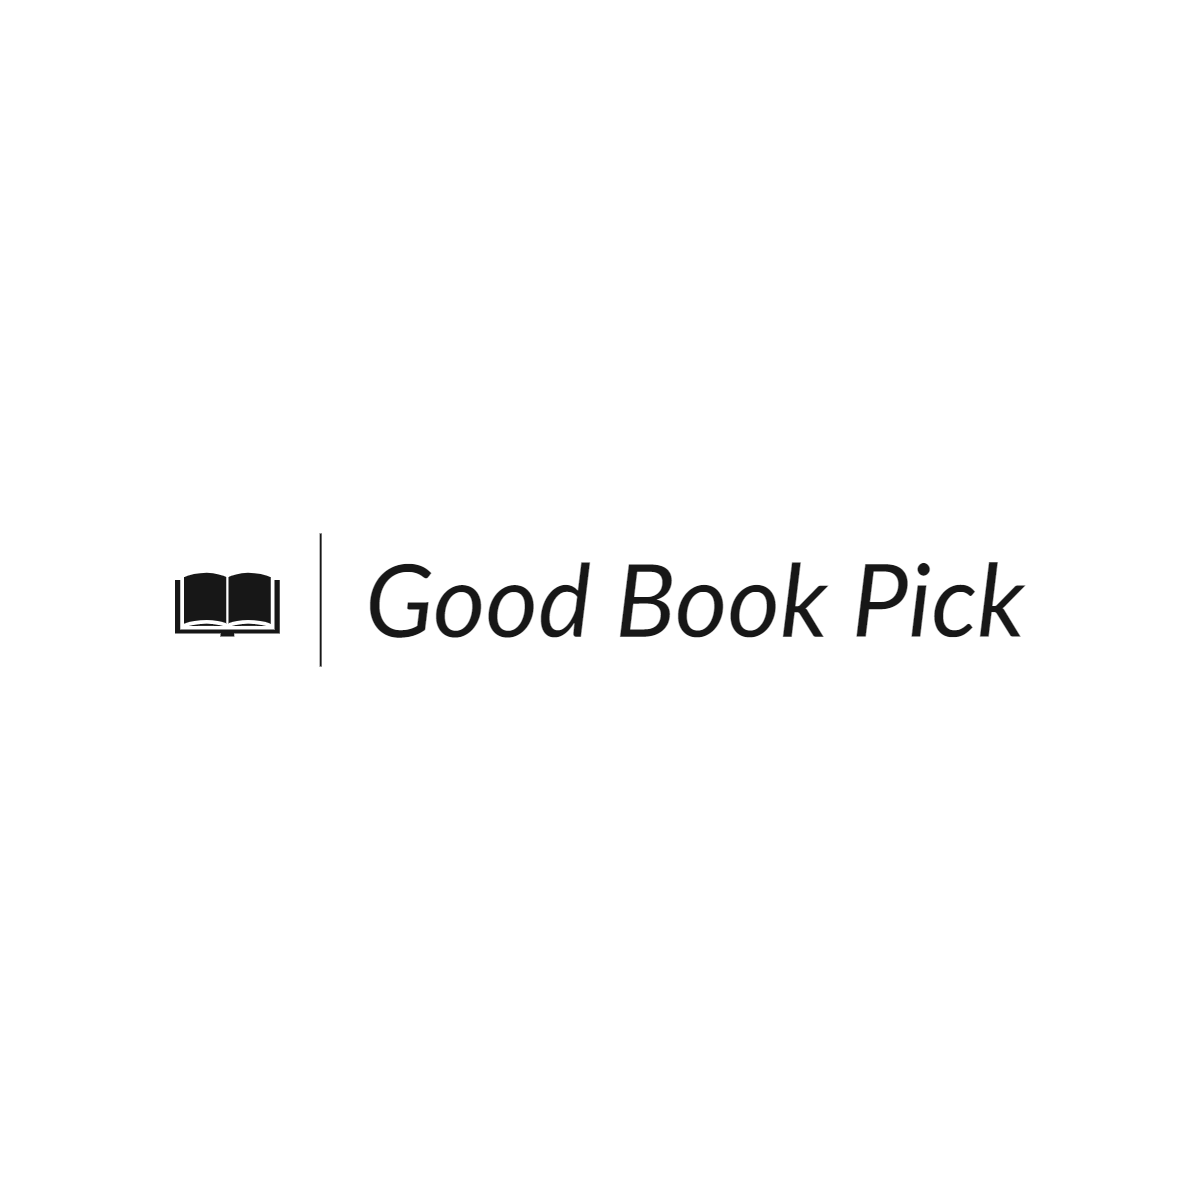 Good Book Pick logo